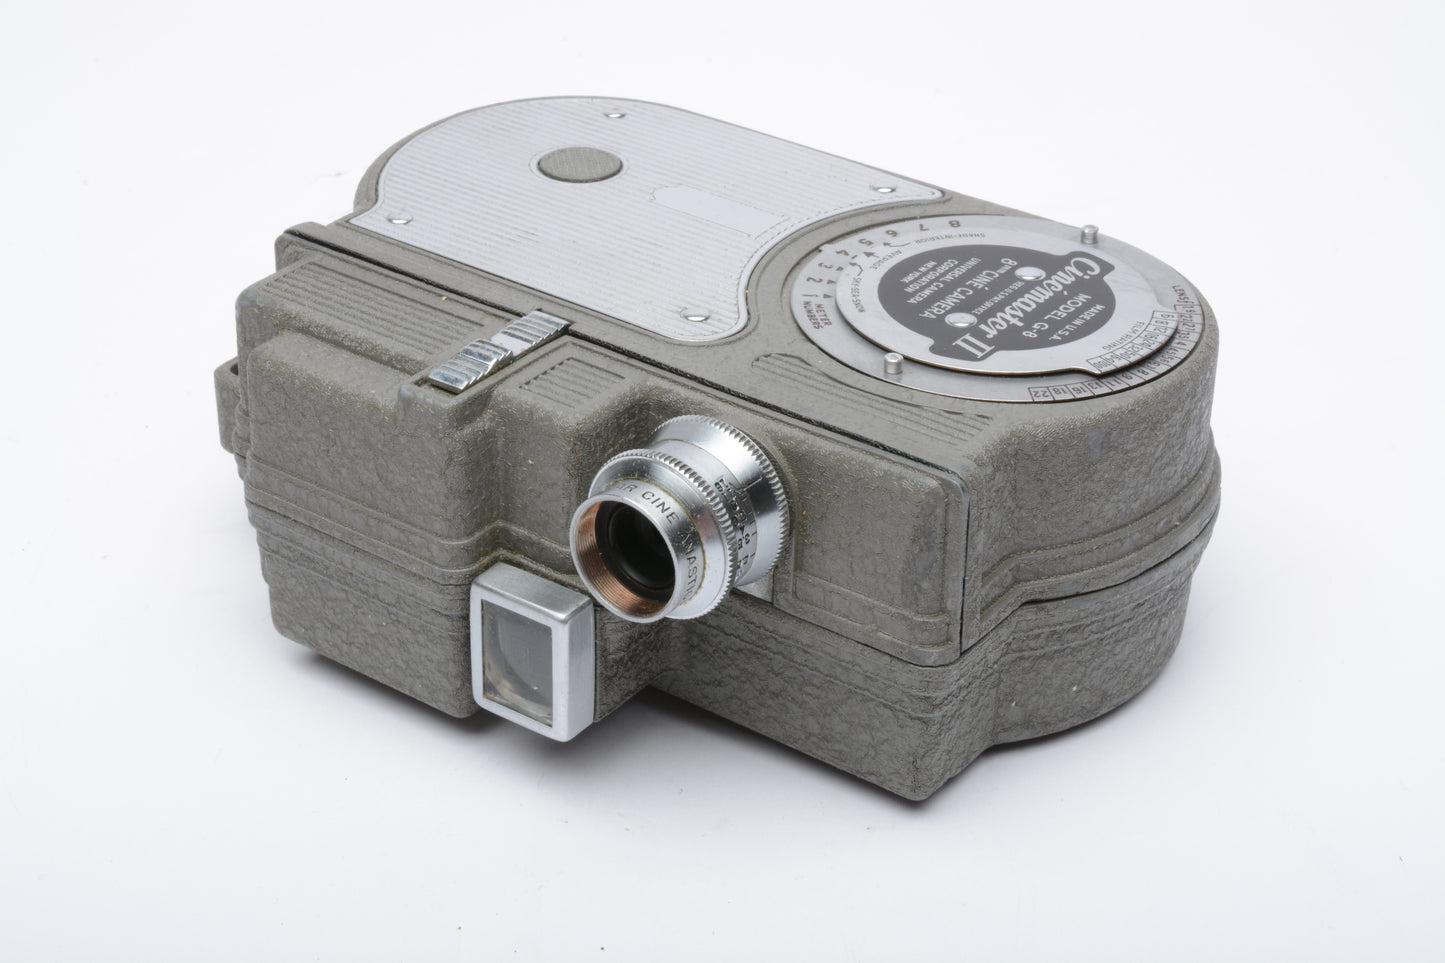 Vintage Universal Camera Cinemaster II G8 cine camera w/1/2" lens, works!  box + manual